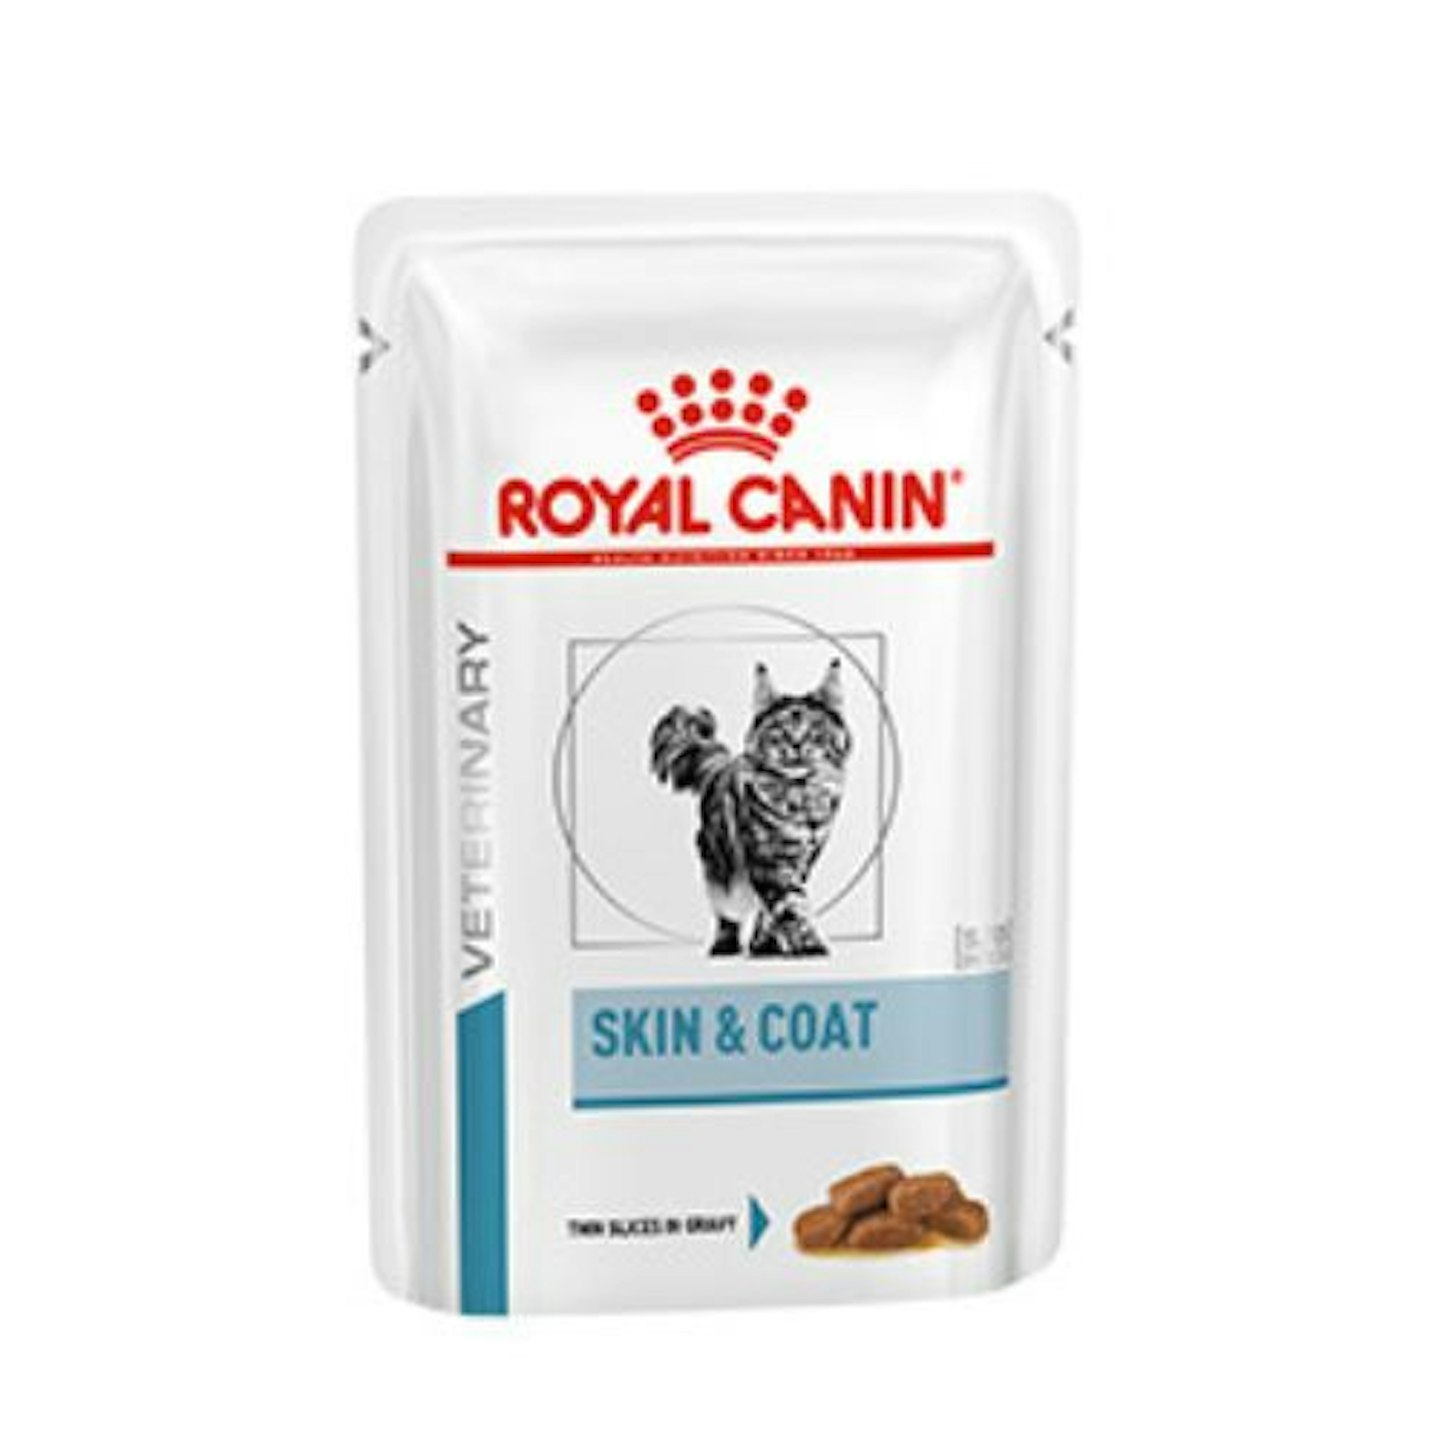 ROYAL CANIN Skin and Coat Veterinary Health Nutrition Cat Food